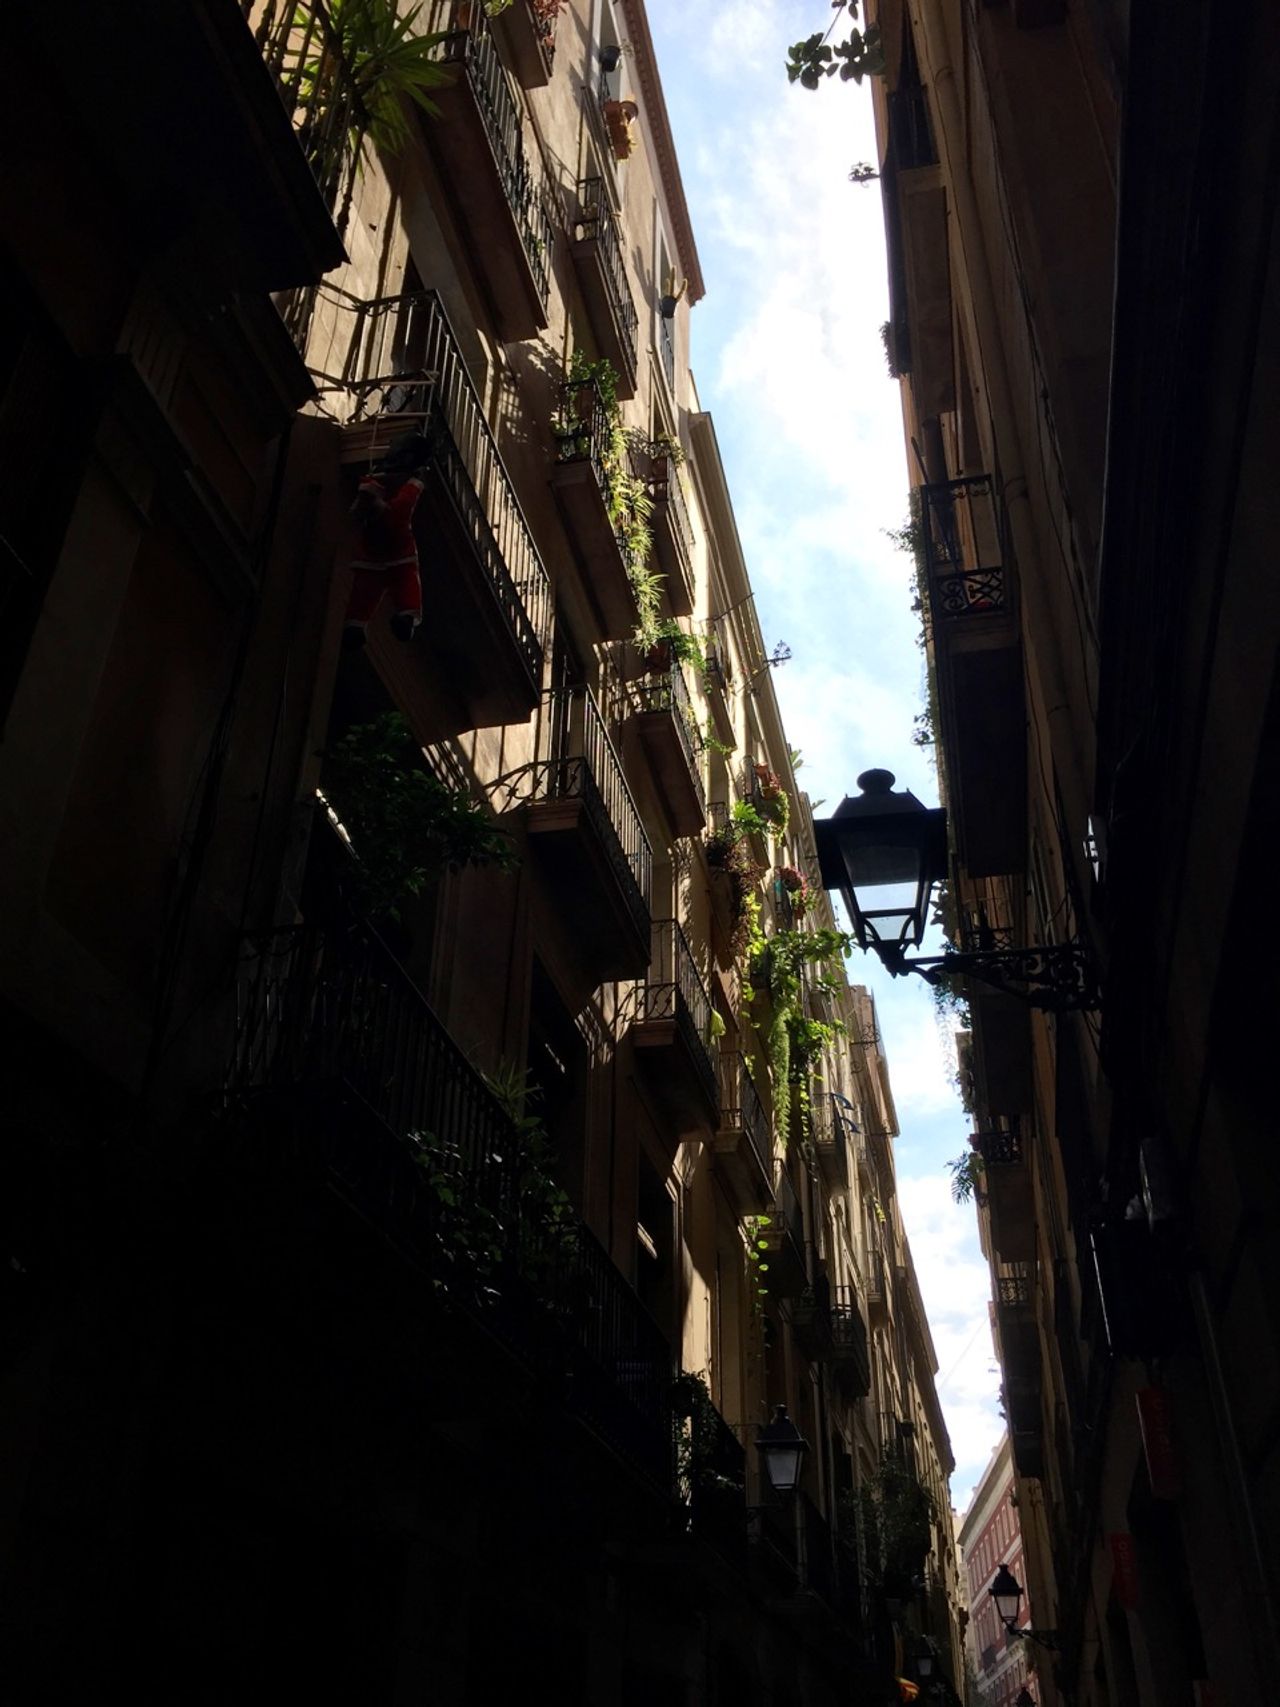 Looking upward at balconies in a narrow alley